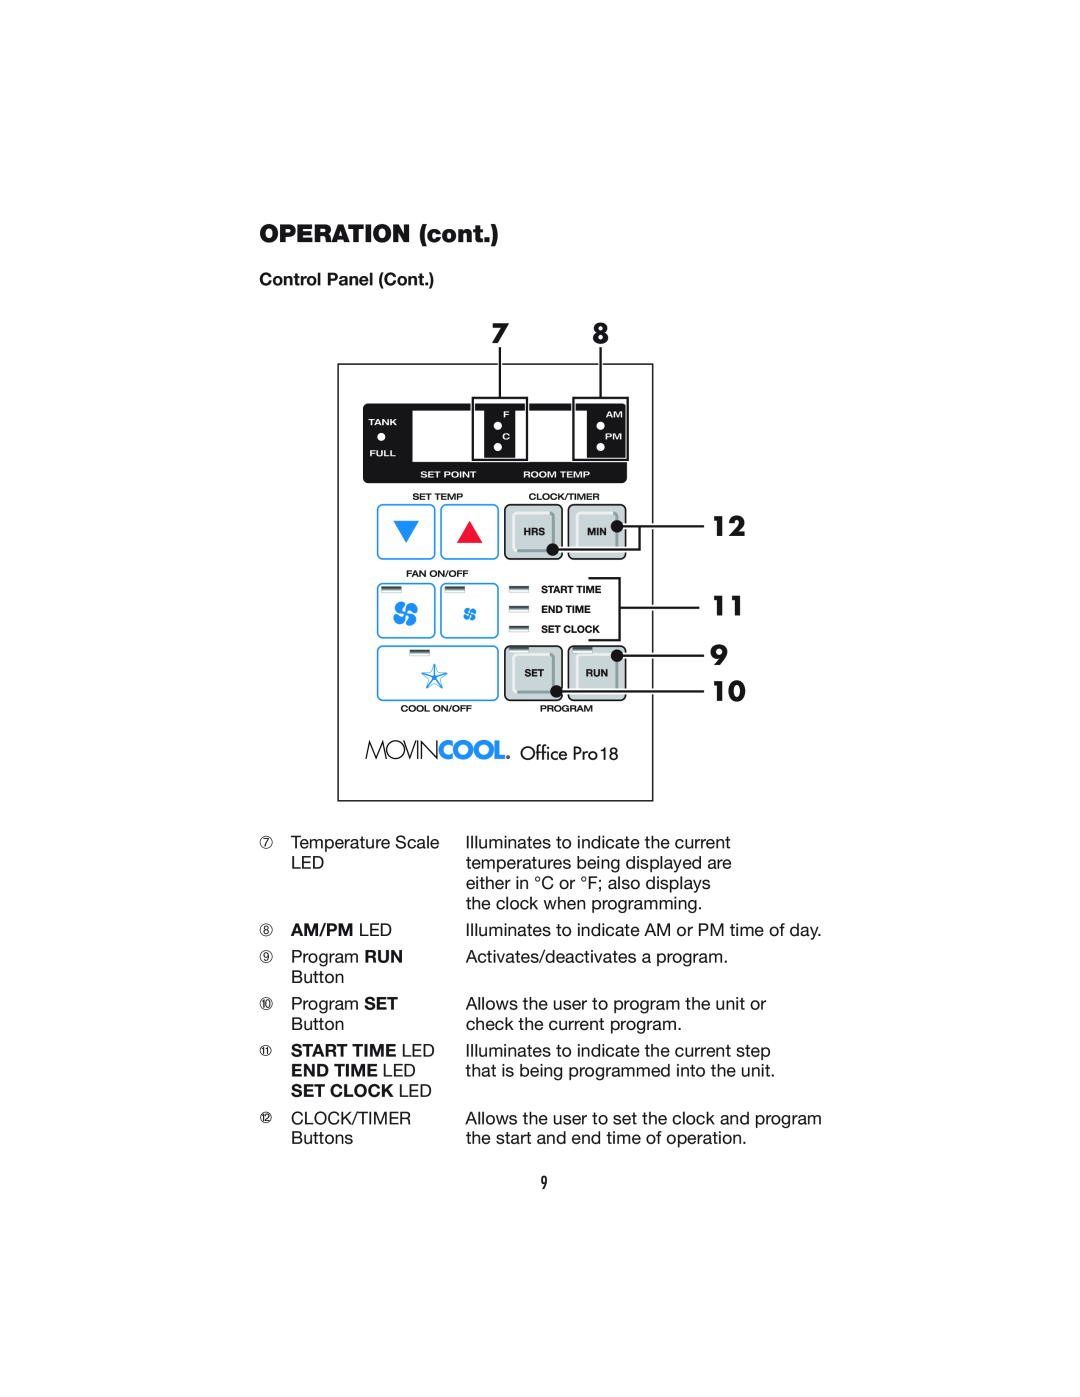 Denso PRO 18 operation manual OPERATION cont, Control Panel Cont, ➇AM/PM LED, Start Time Led End Time Led Set Clock Led 